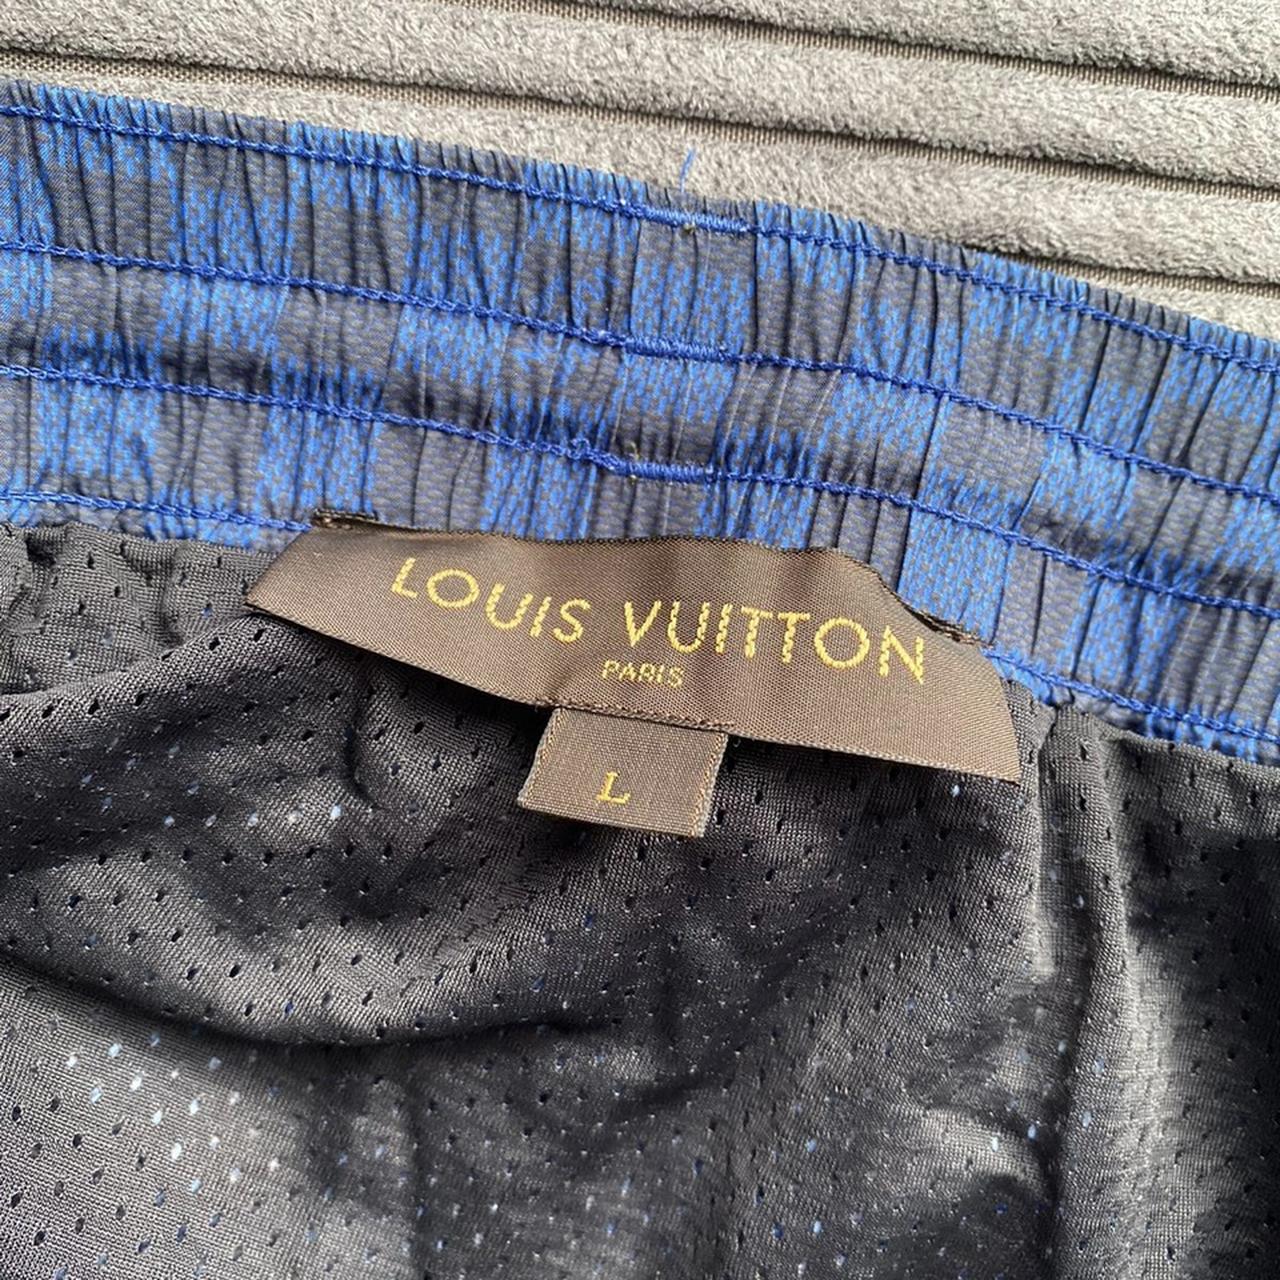 Louis Vuitton 2054 swim shorts 🔥 #fyp #threecreps #personalshopper #t